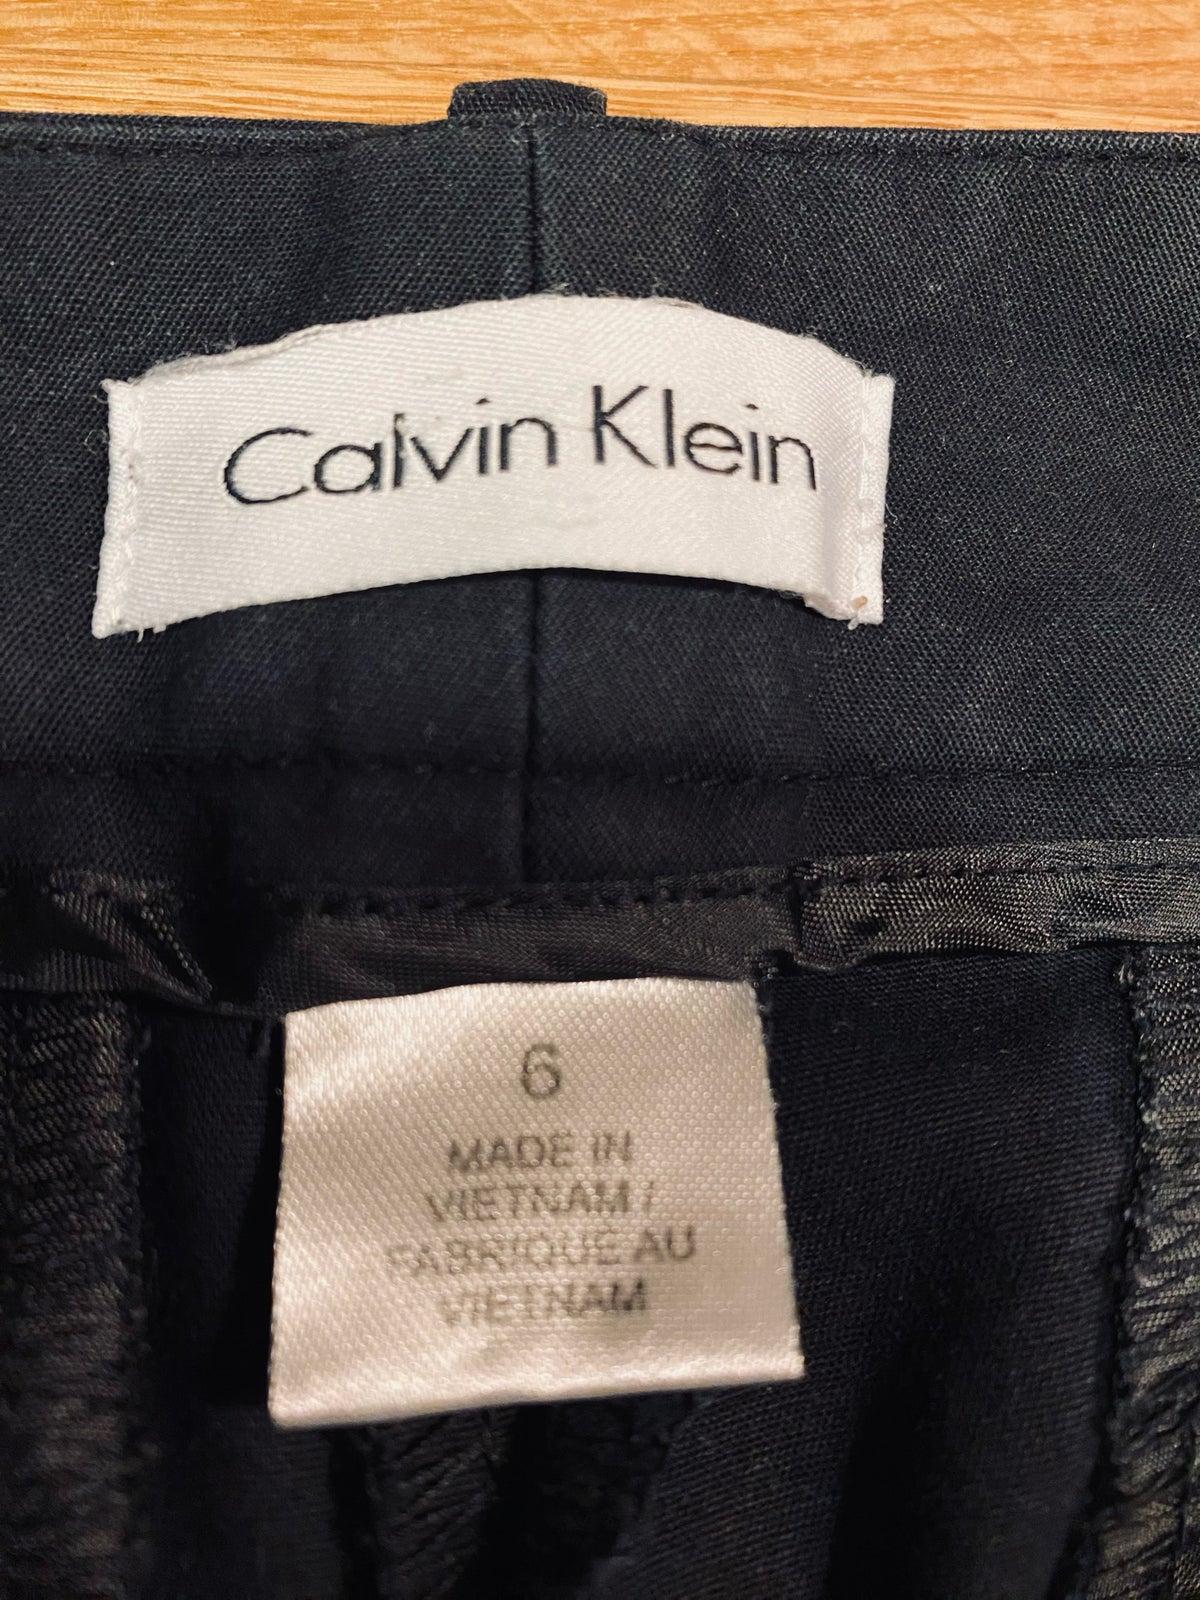 Shorts, Shorts, Calvin Klein